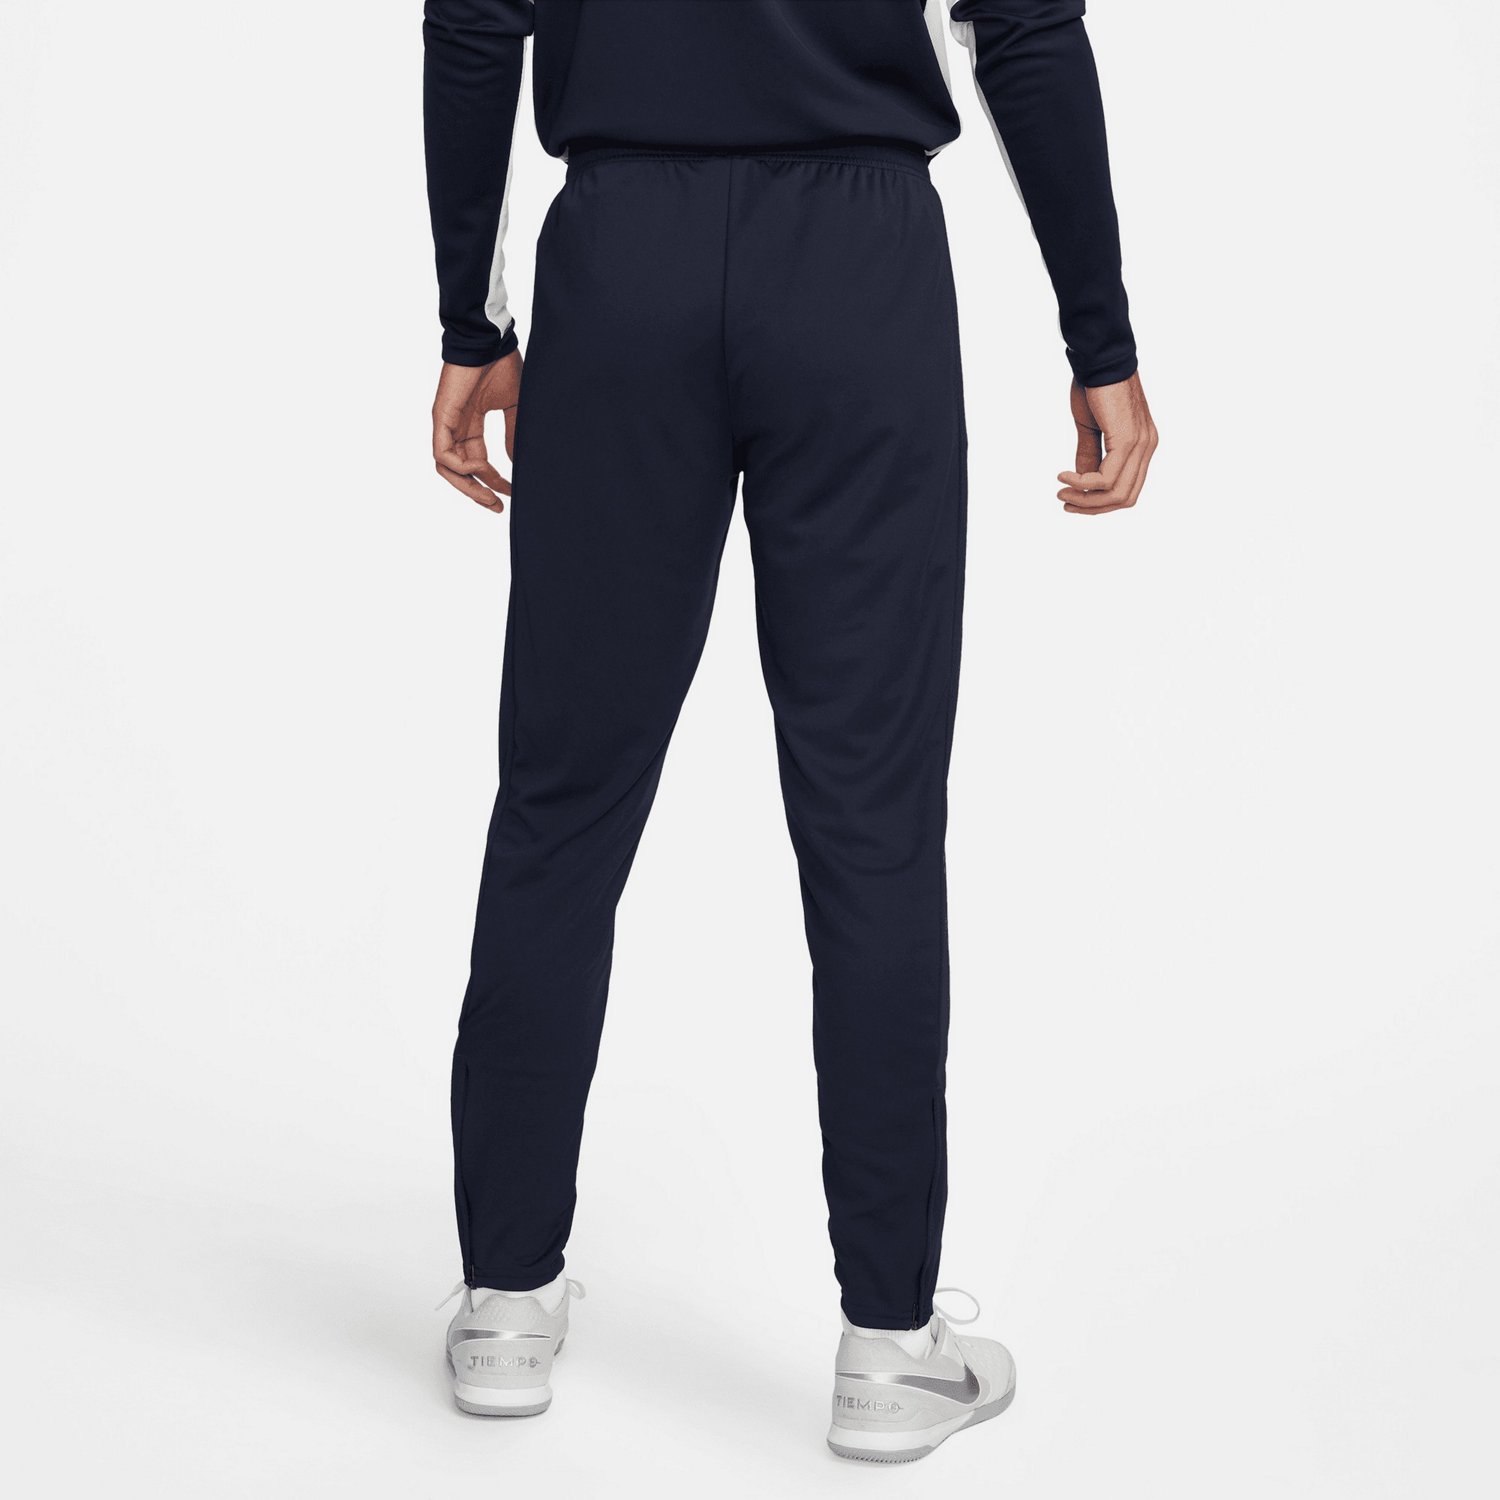 Nike Soccer Dri-FIT Academy pants in black/white